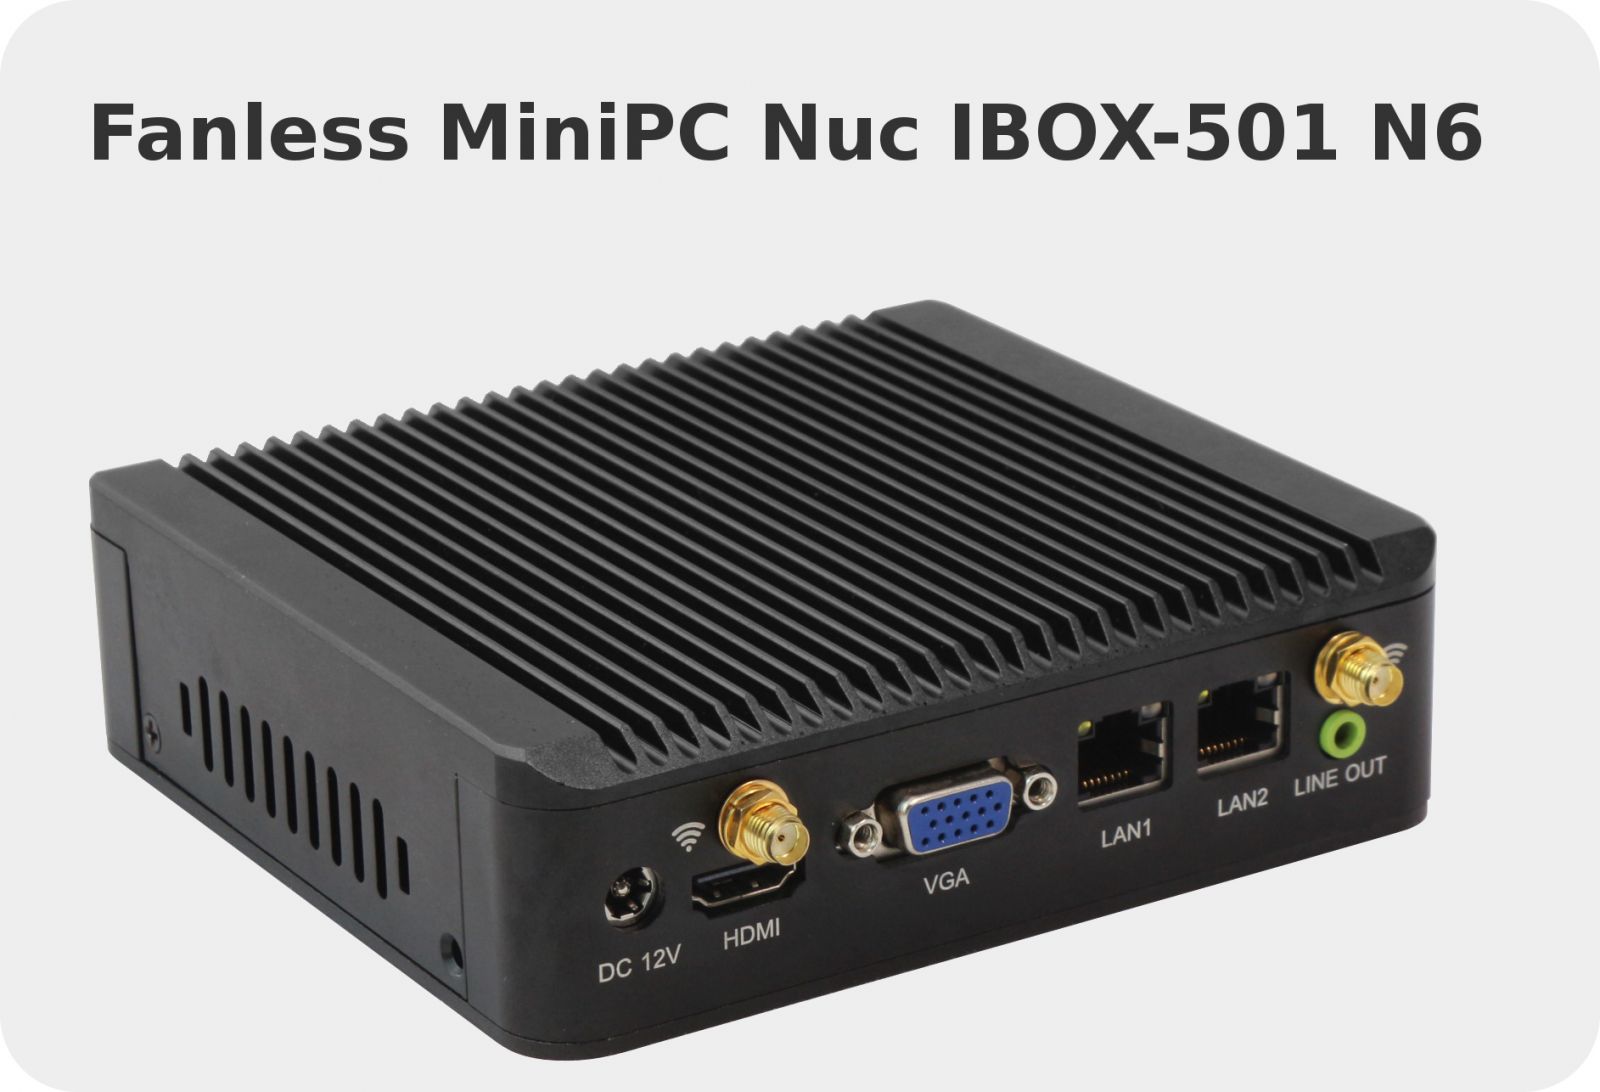 Przemysowy Komuter Fanless MiniPC Nuc IBOX-501 N6